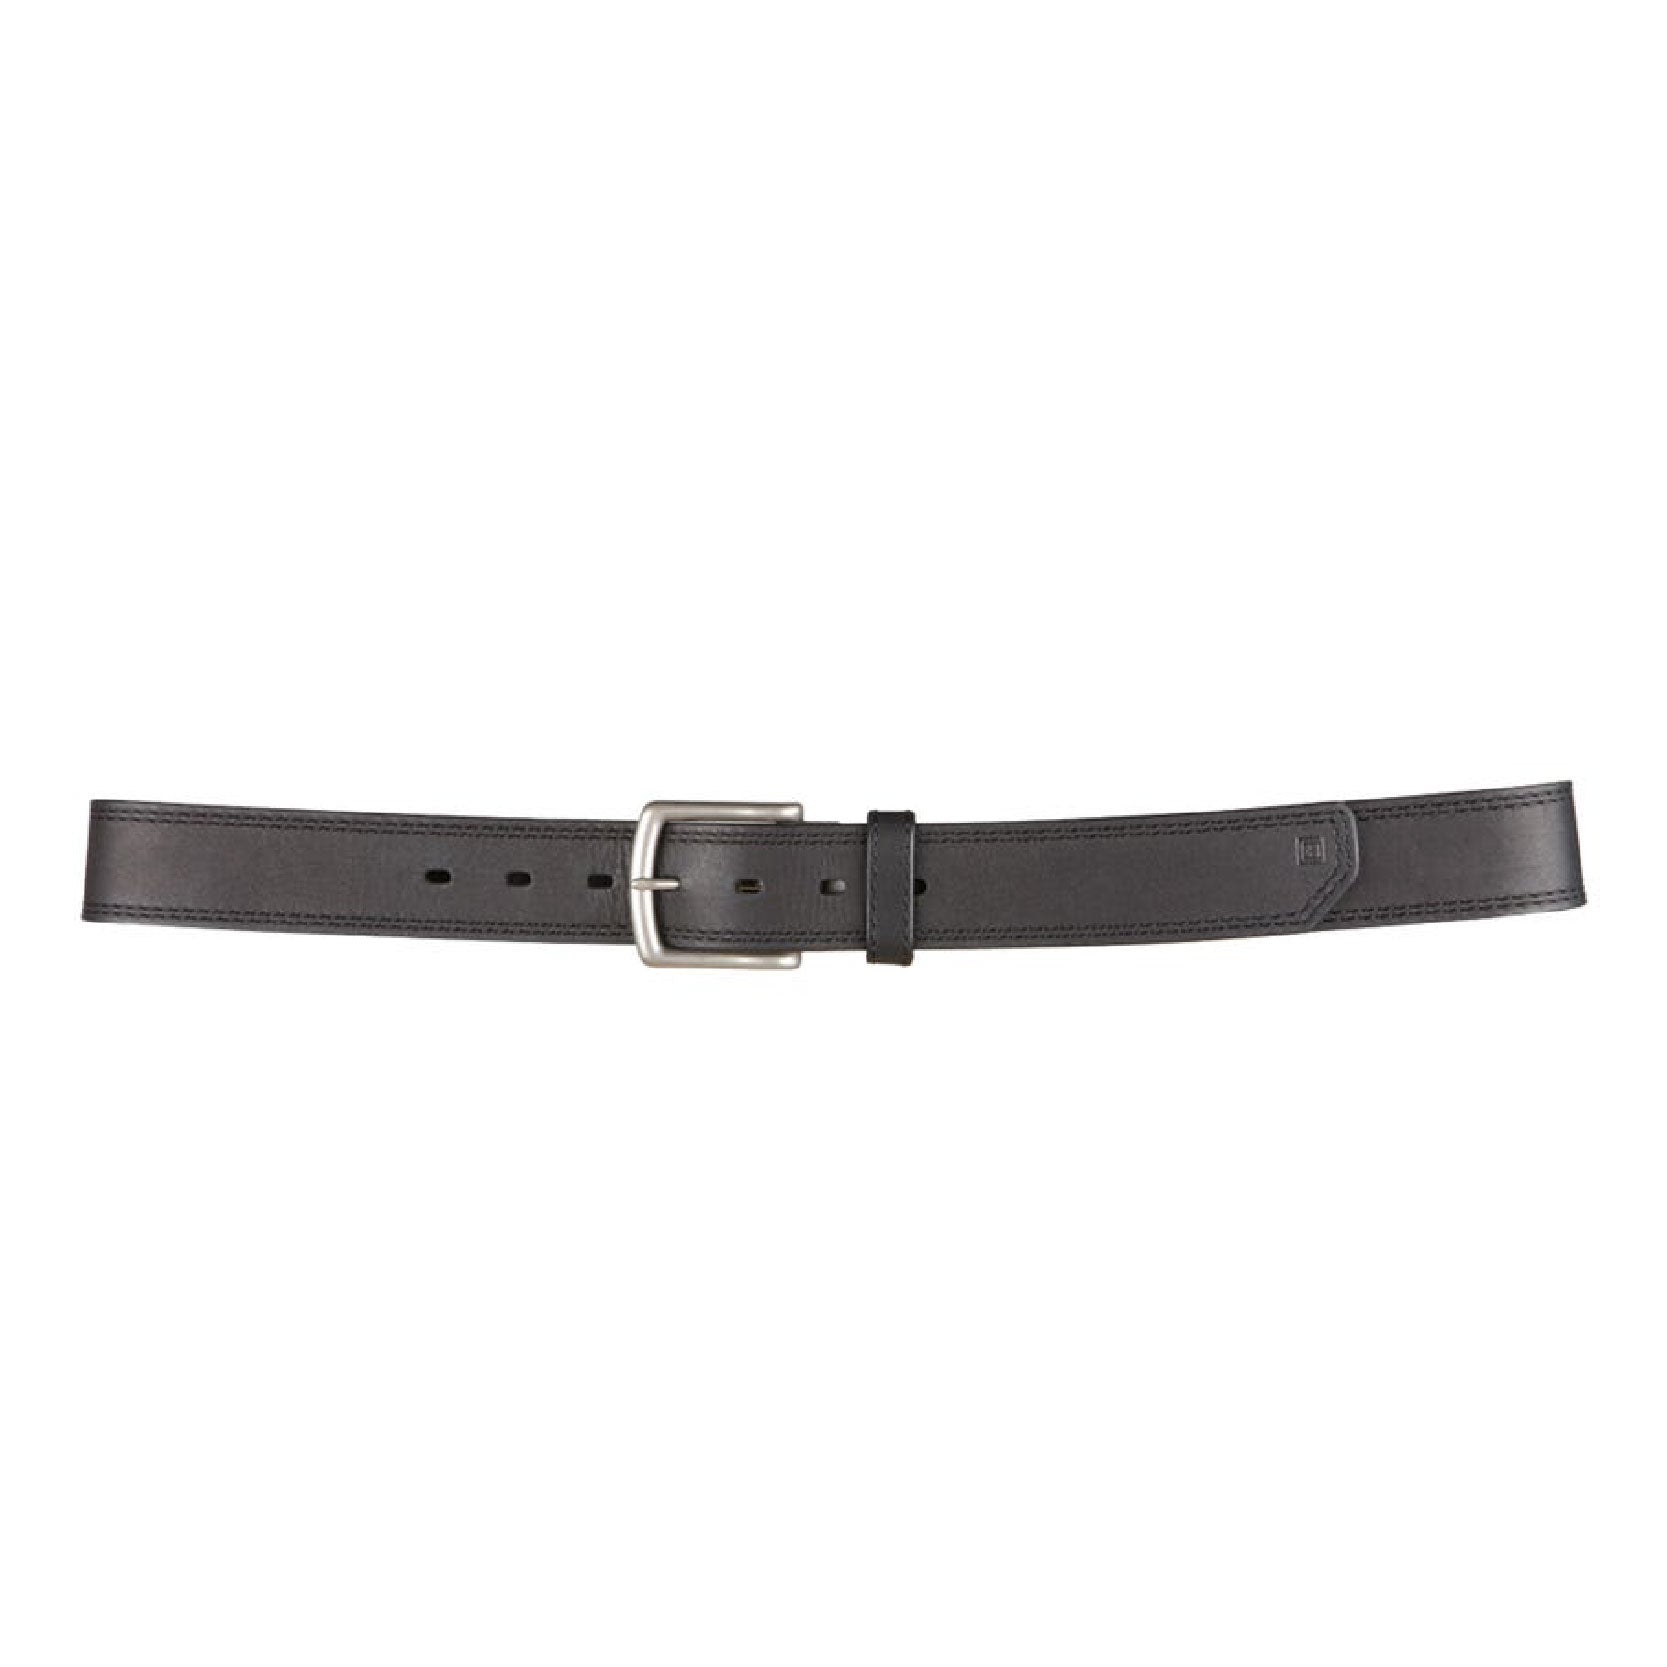 5.11 1.5" Arc Leather Belt [Black]